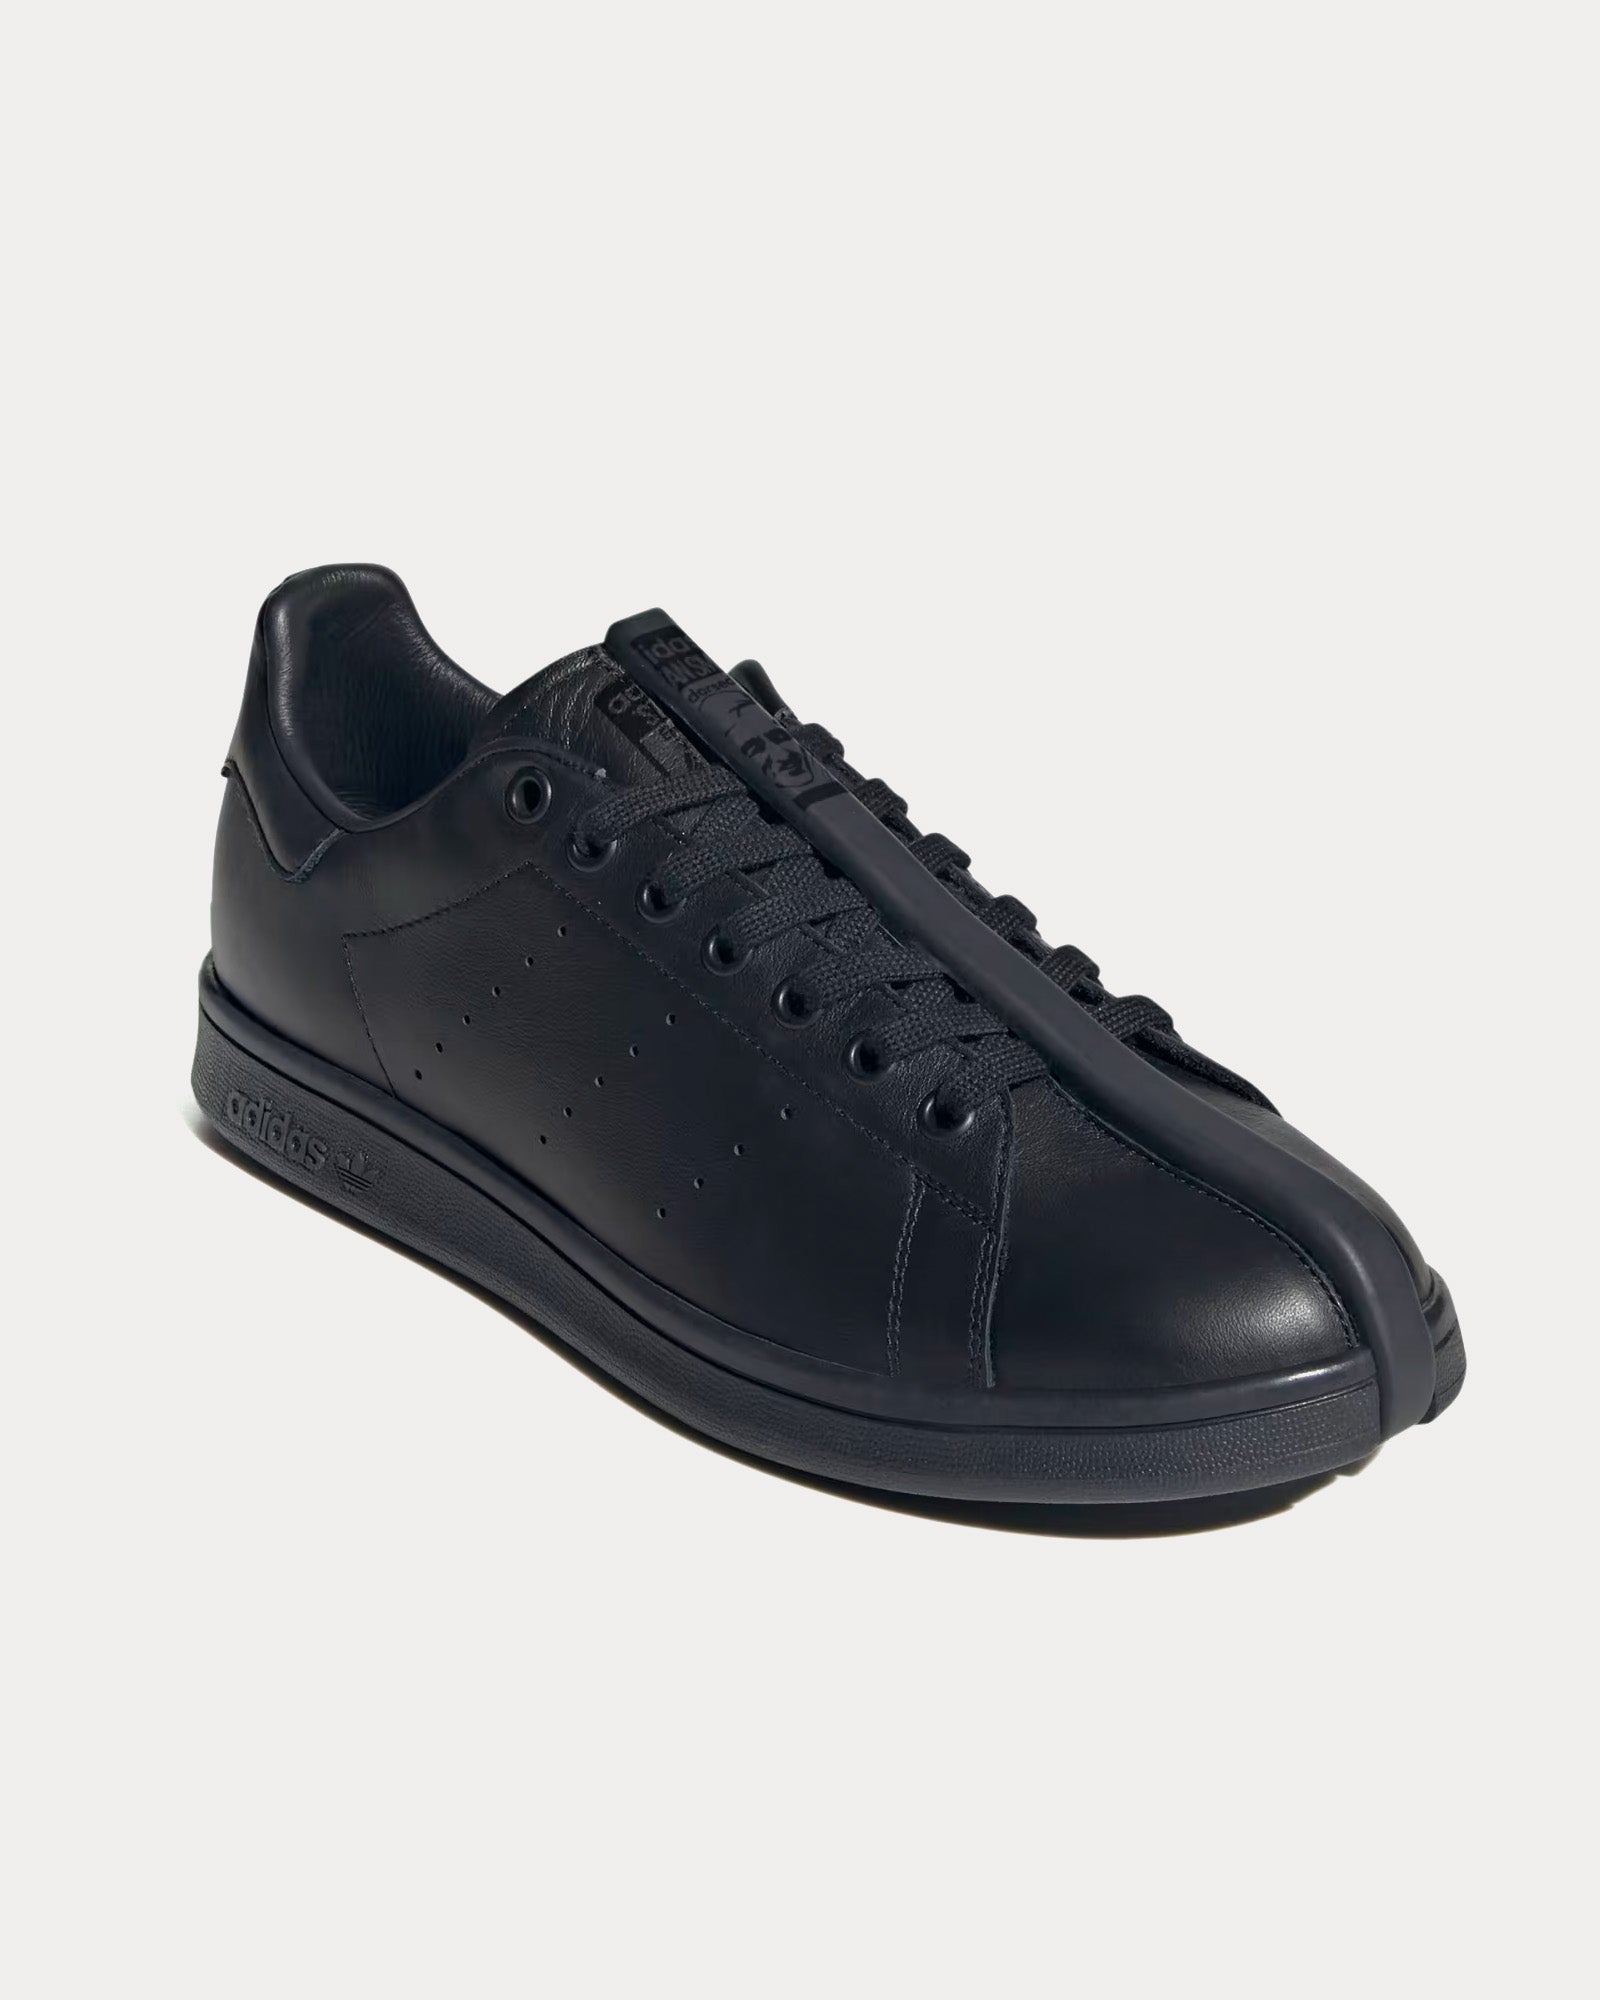 Adidas x Craig Green - Split Stan Smith Core Black / Core Black / Granite Low Top Sneakers